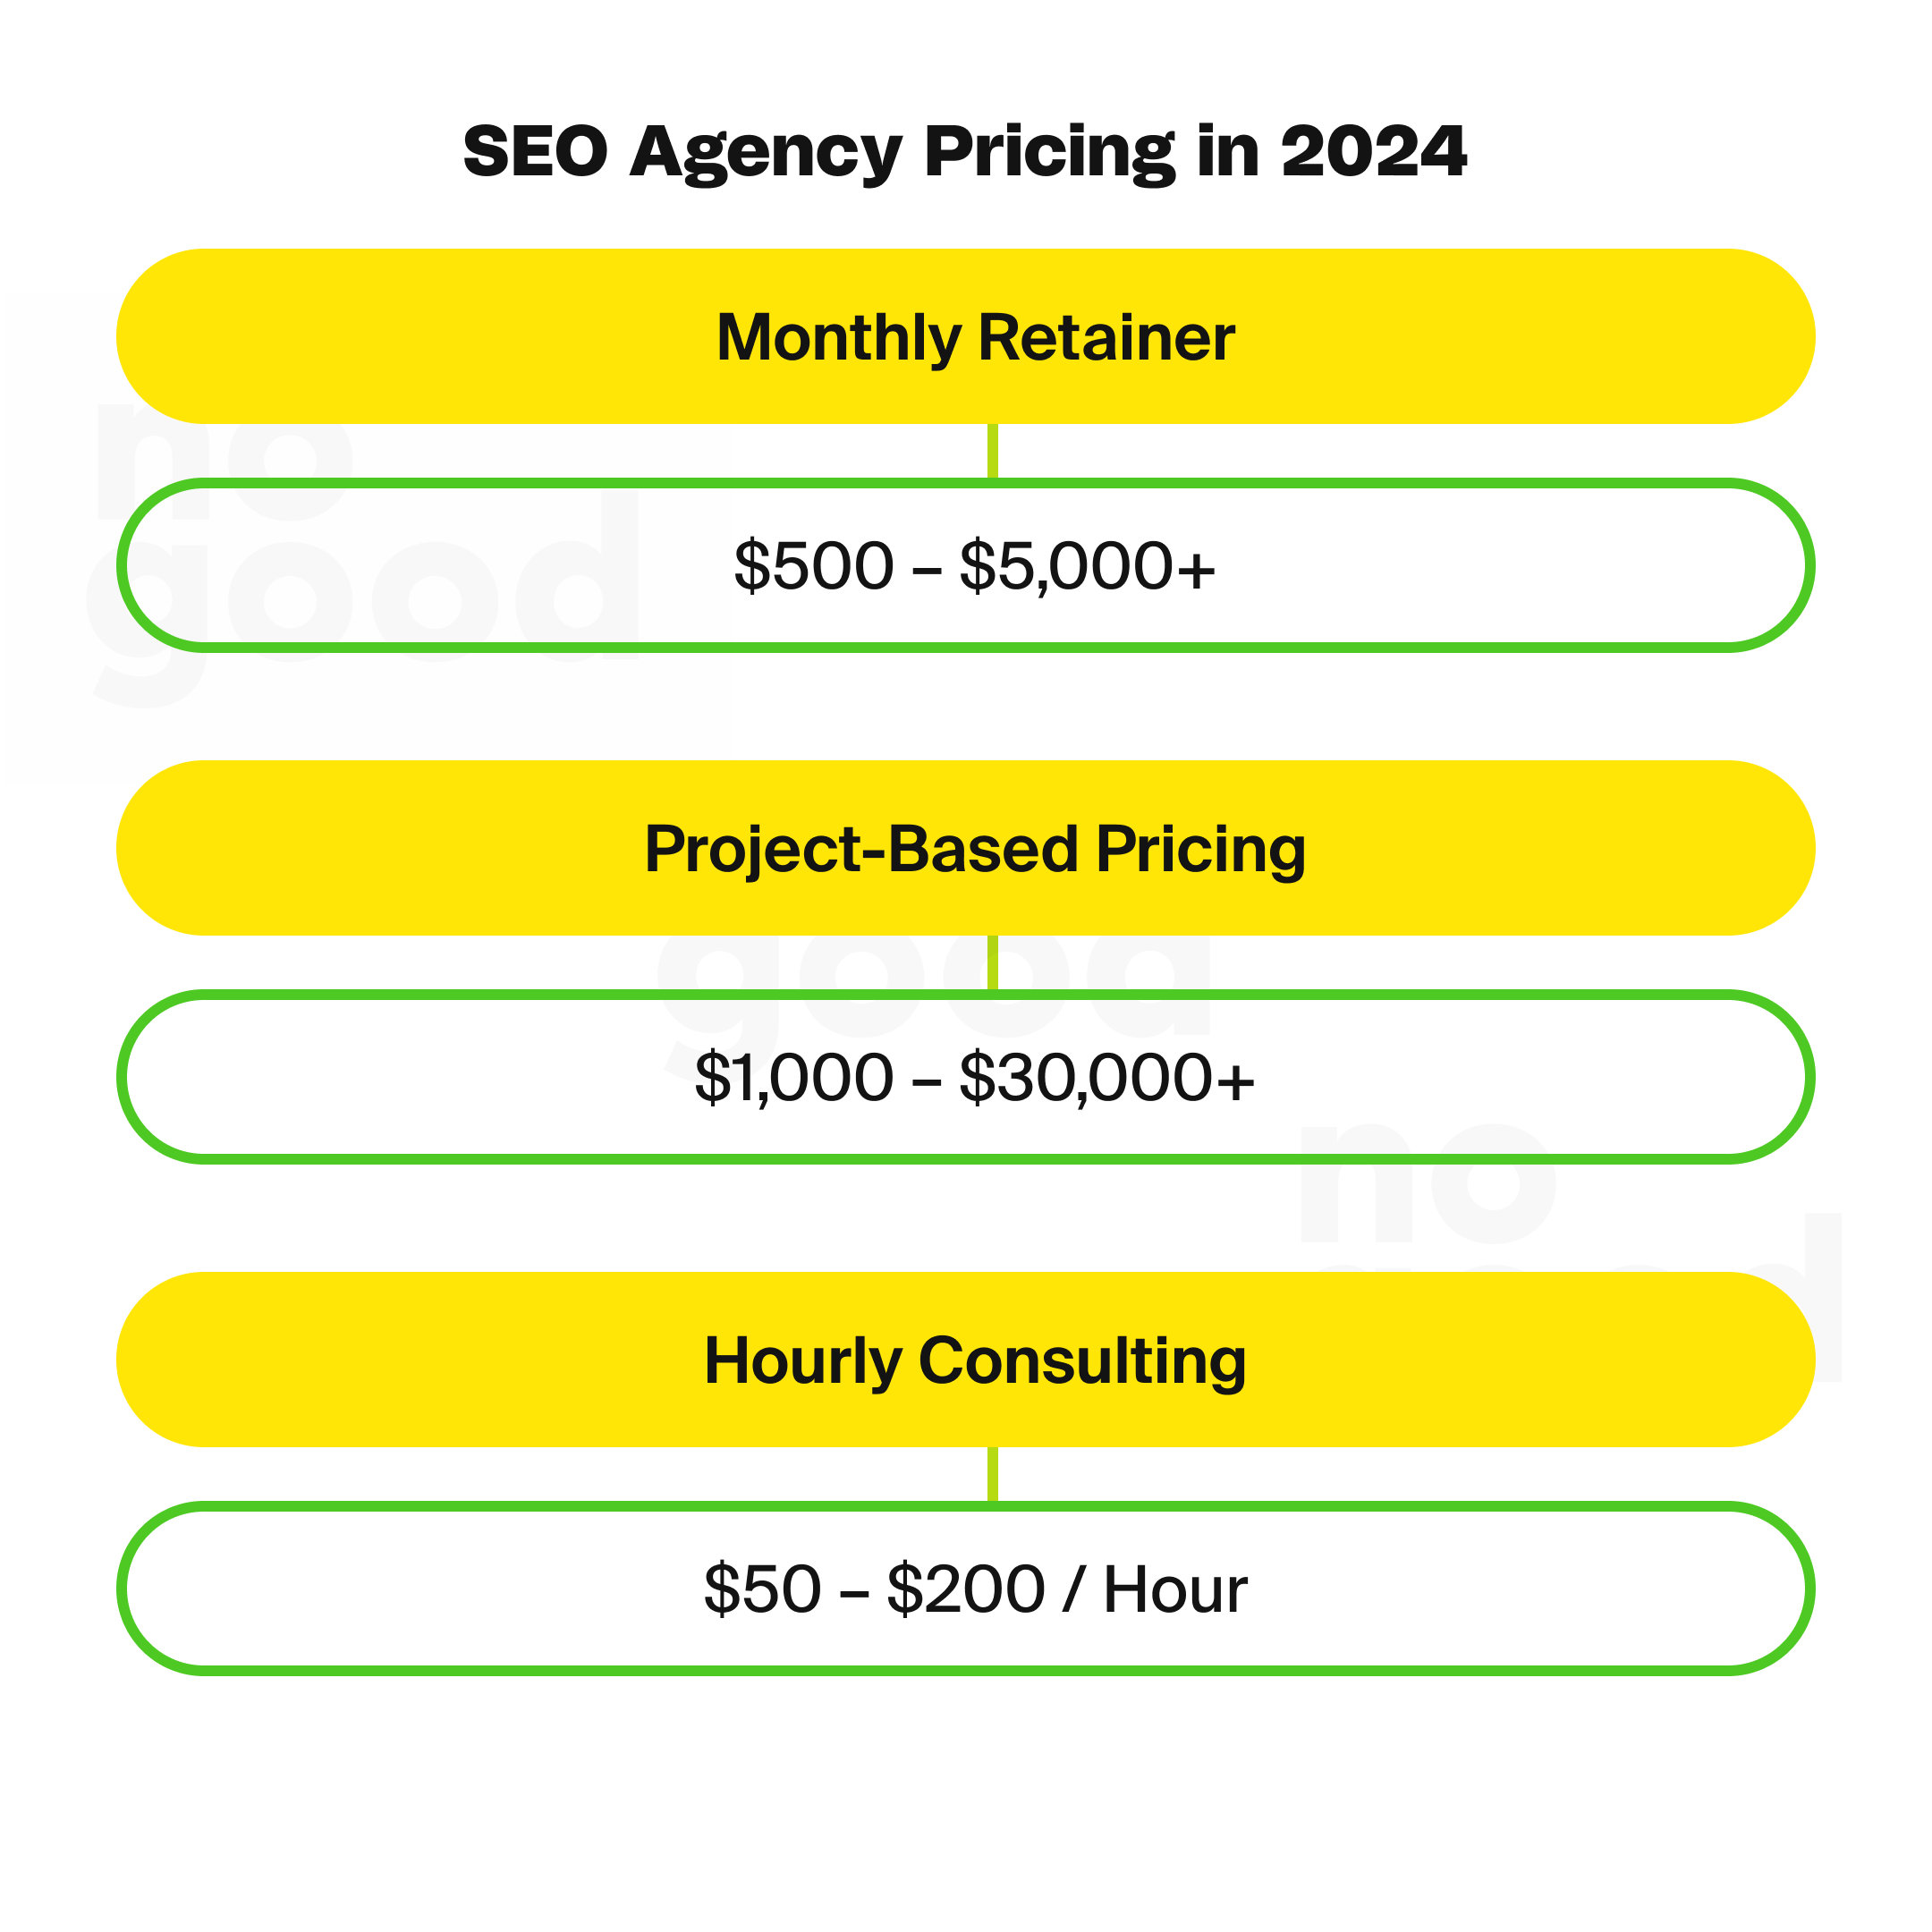 SEO agency pricing in 2024